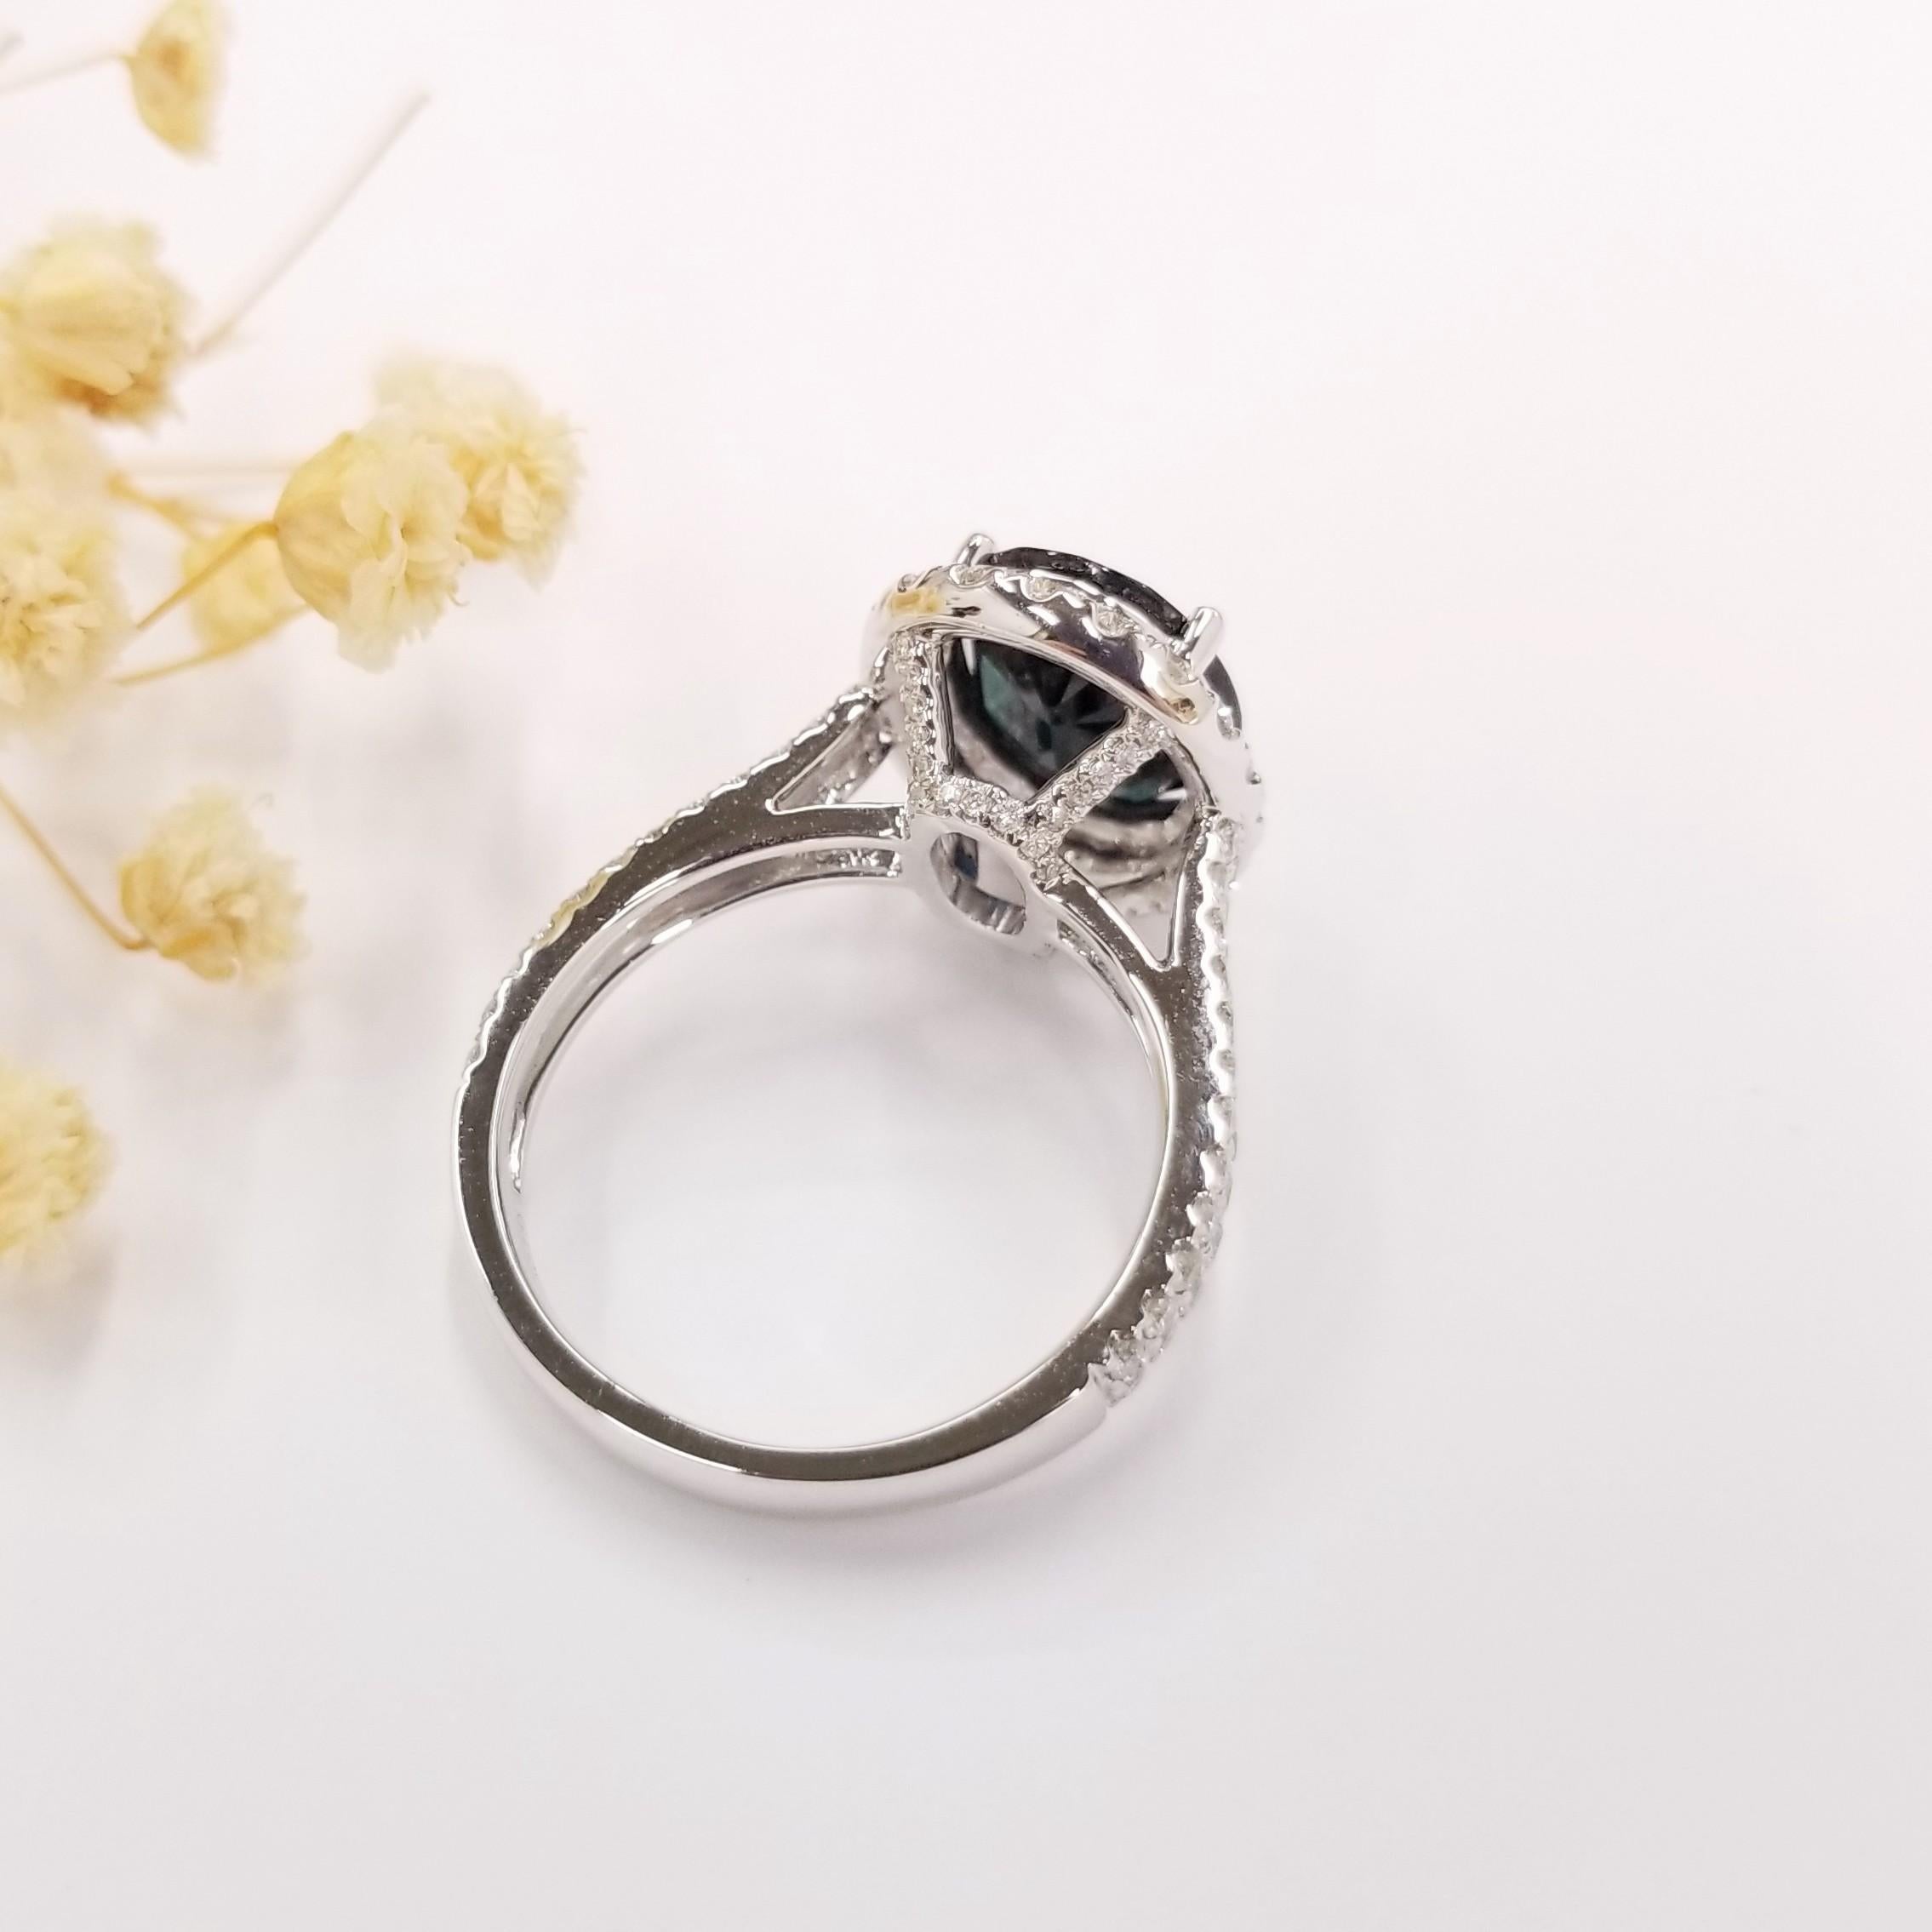 IGI Certified 3.03Carat Blue Sapphire & Diamond Ring in 18K White Gold For Sale 1